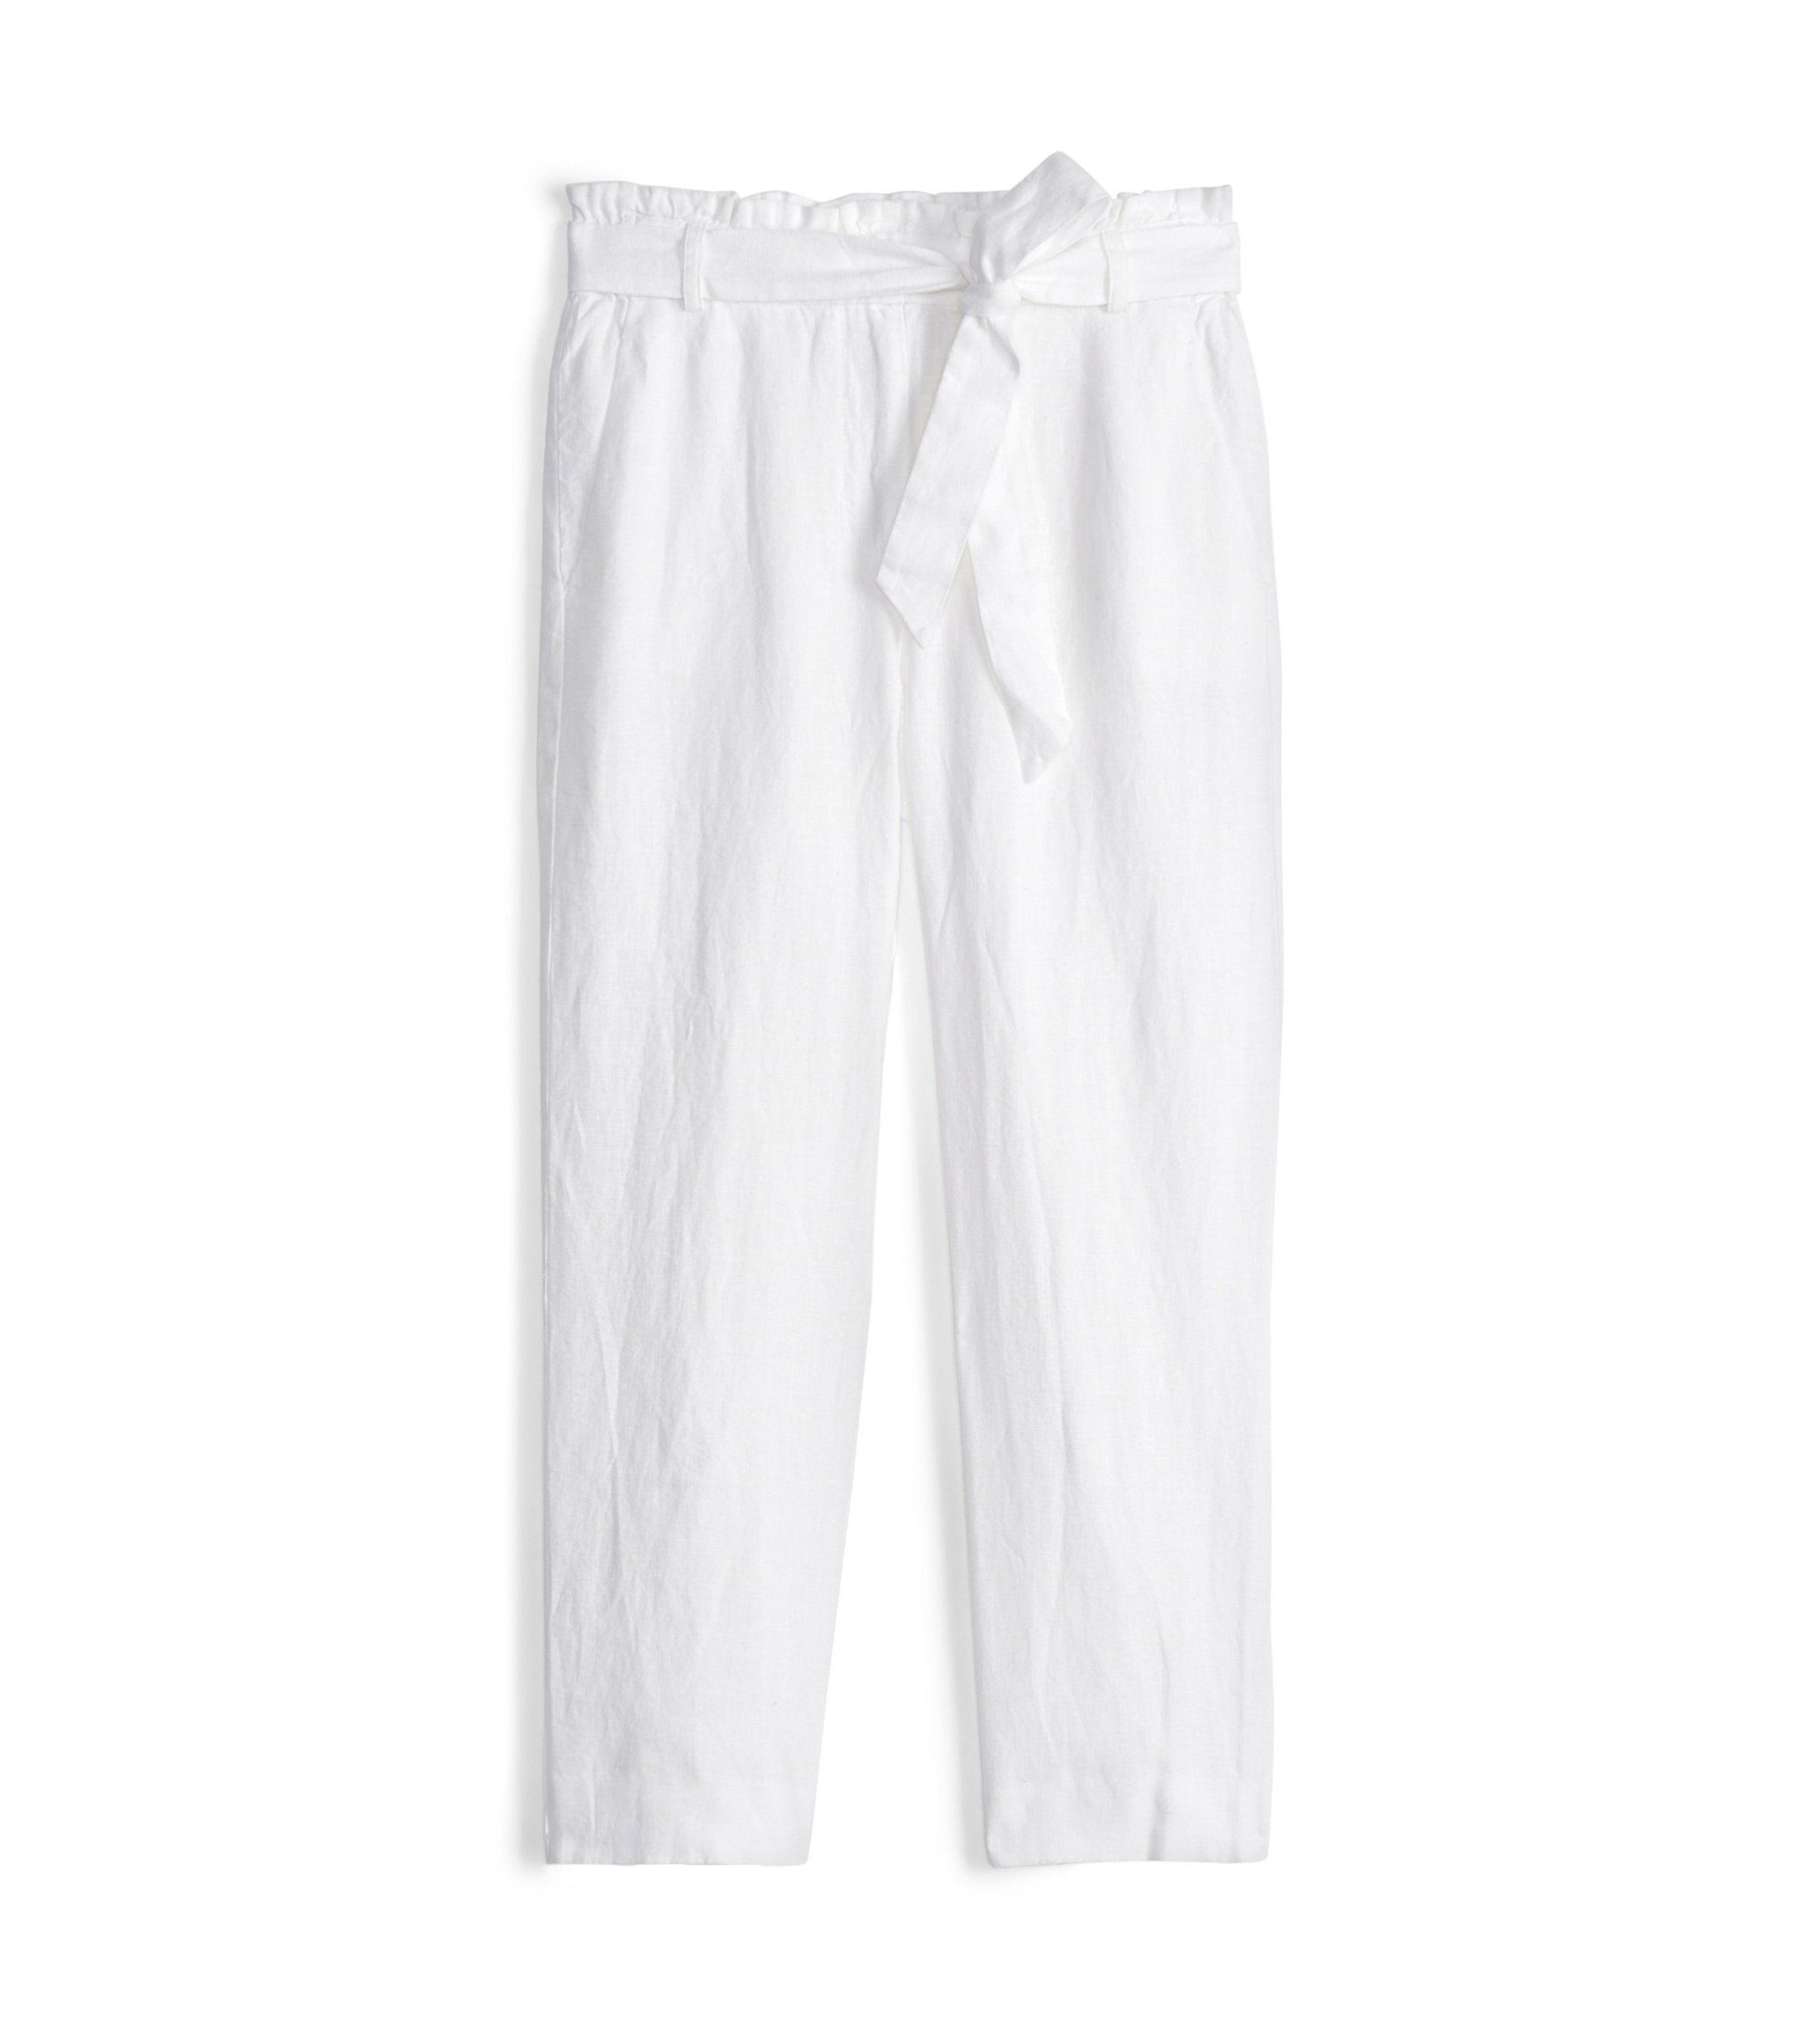 Cute Linen-Blend Pants - Paper Bag Waist Pants - Woven Pants - Lulus